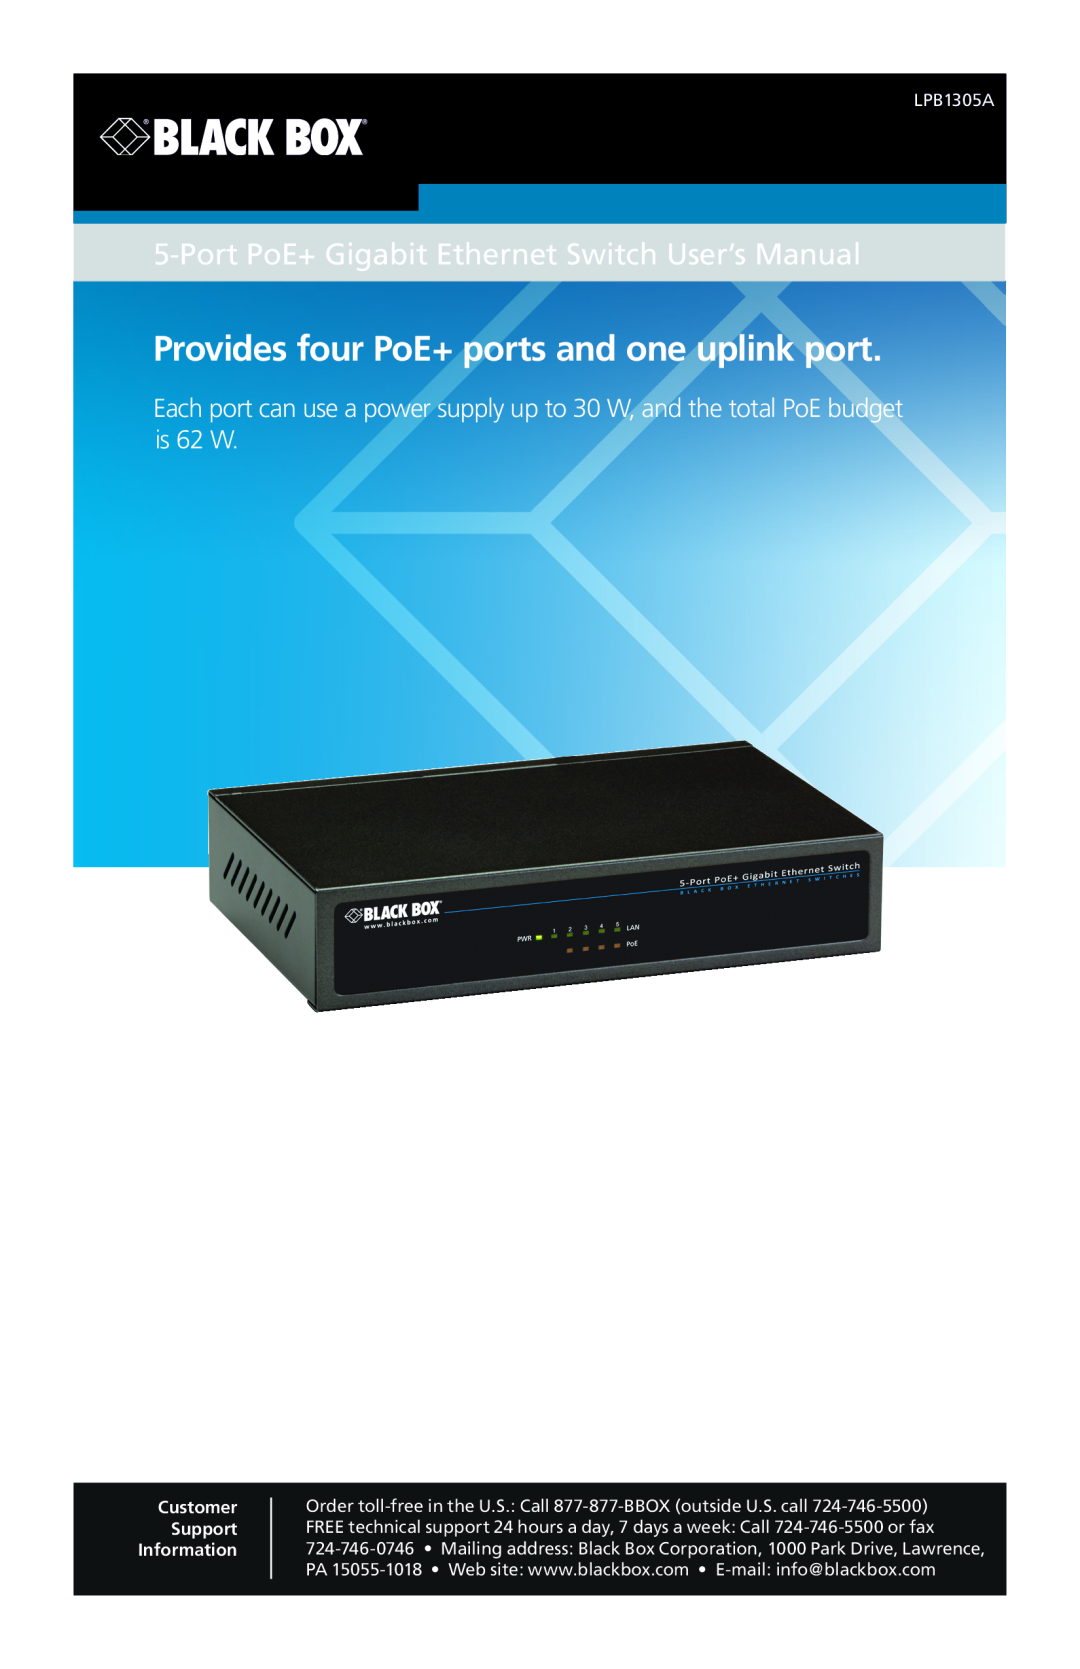 Black Box 5-Port POE+ Gigabit Ethernet Switch, LPB1305A user manual PortPoE+ Gigabit Ethernet Switch User’s Manual 